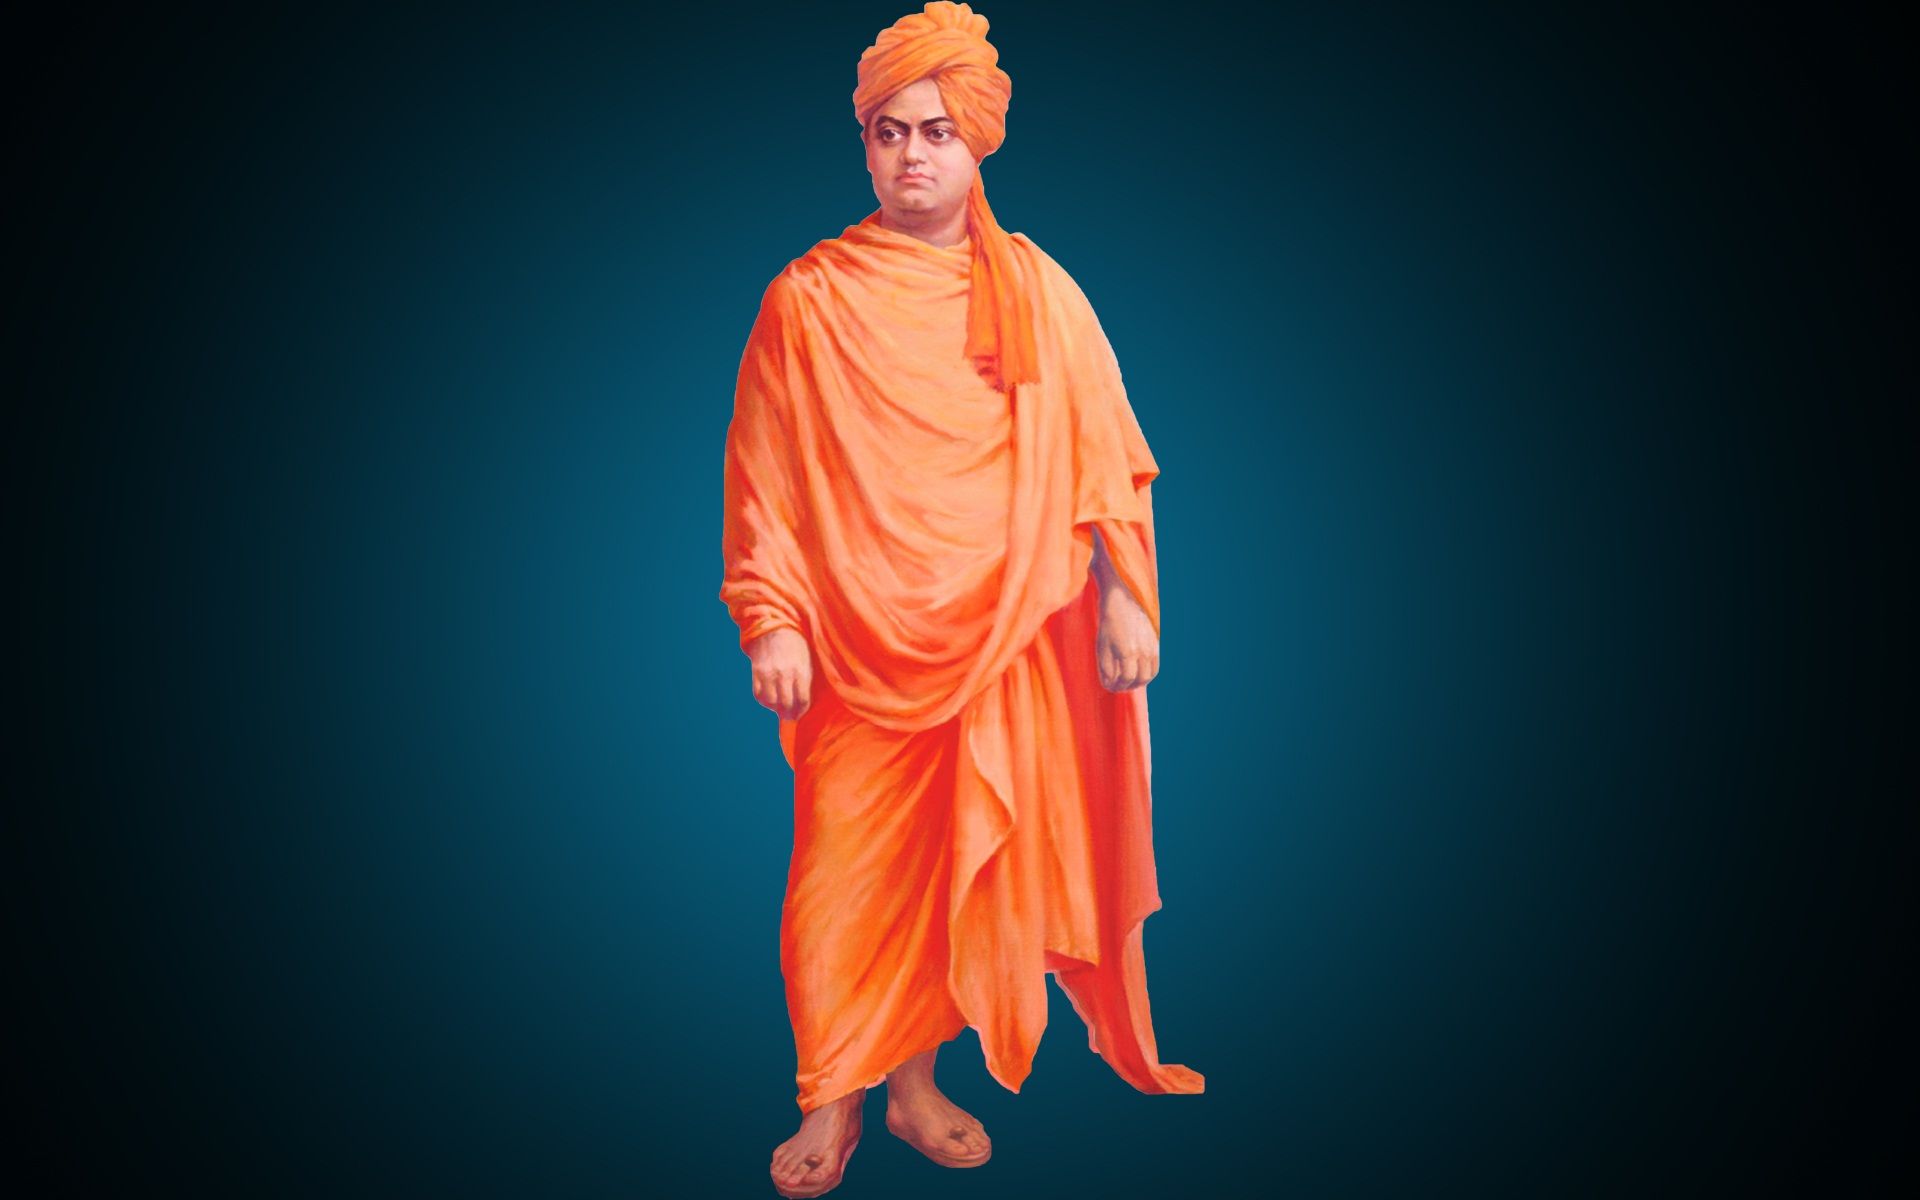 January 12: Birth Anniversary of one of the most influential spiritual leaders Narendranath Dutta alias Swami Vivekananda